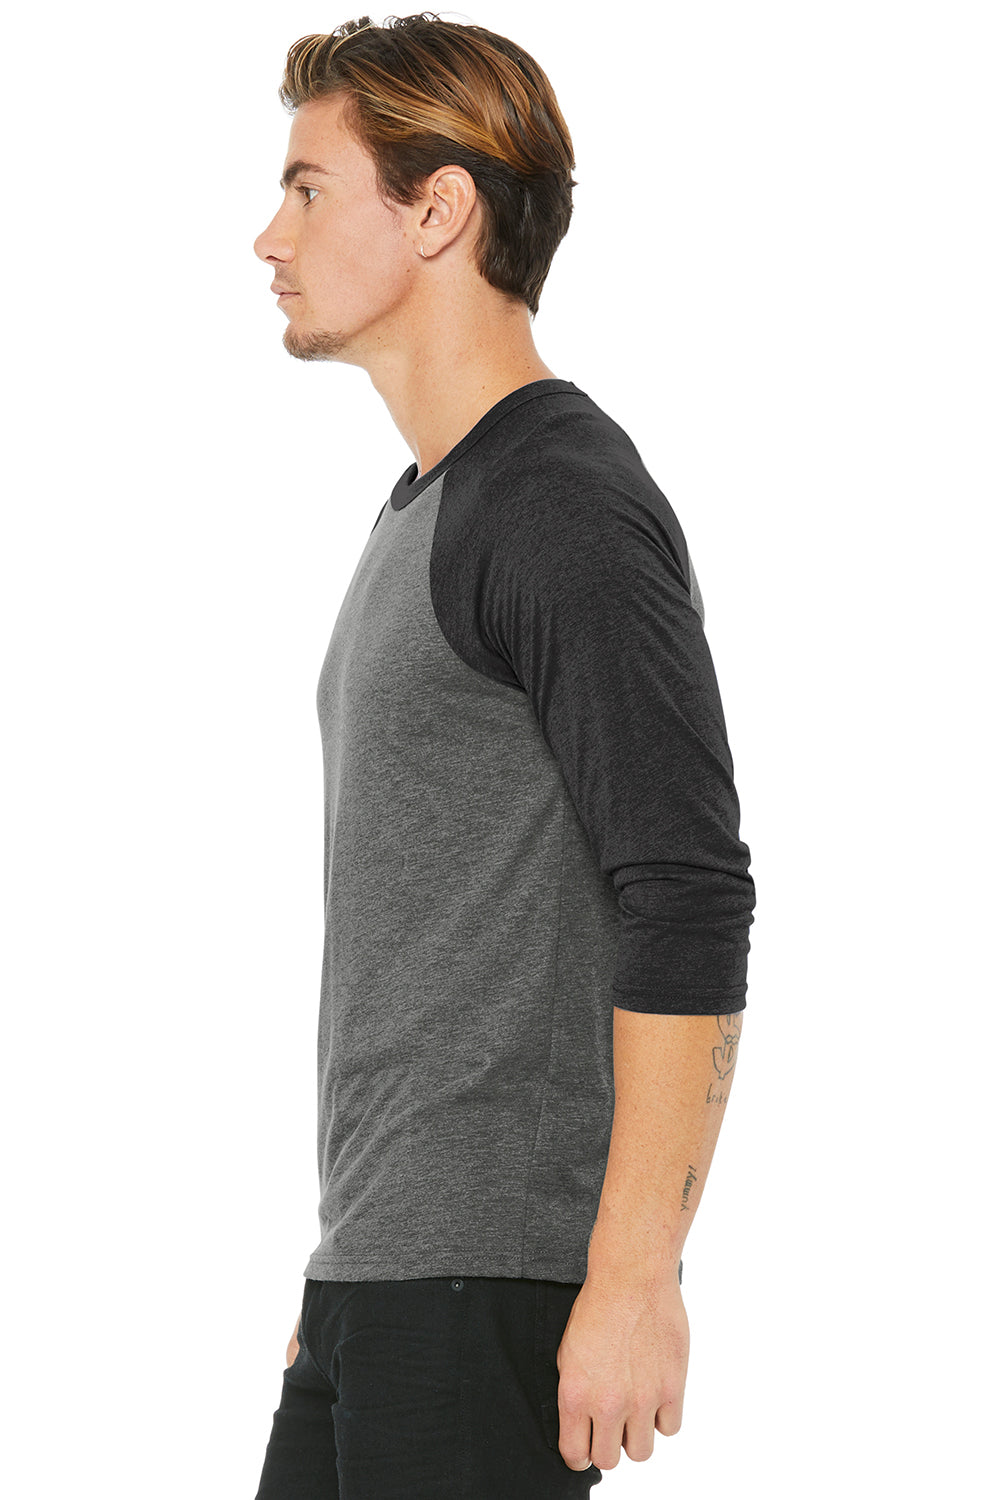 Bella + Canvas BC3200/3200 Mens 3/4 Sleeve Crewneck T-Shirt Grey/Charcoal Black Model Side